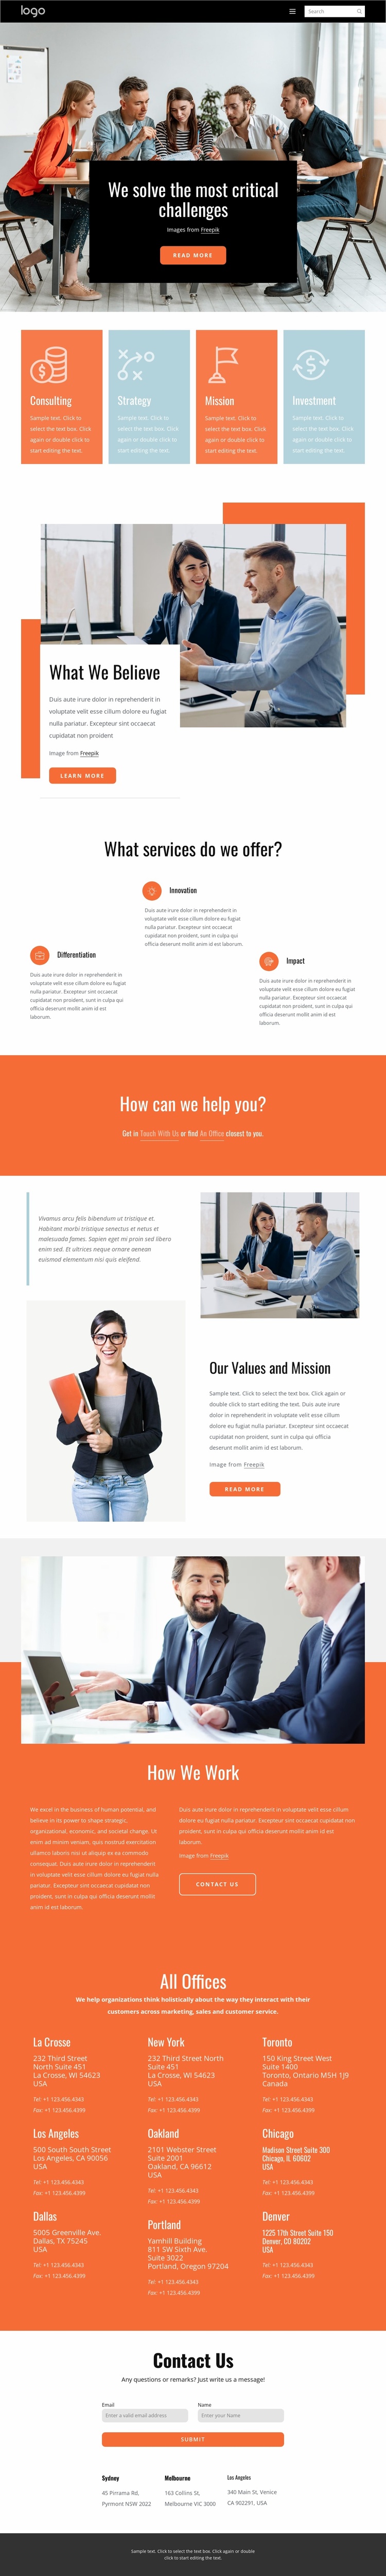 We help clients solve complex business problems Website Template